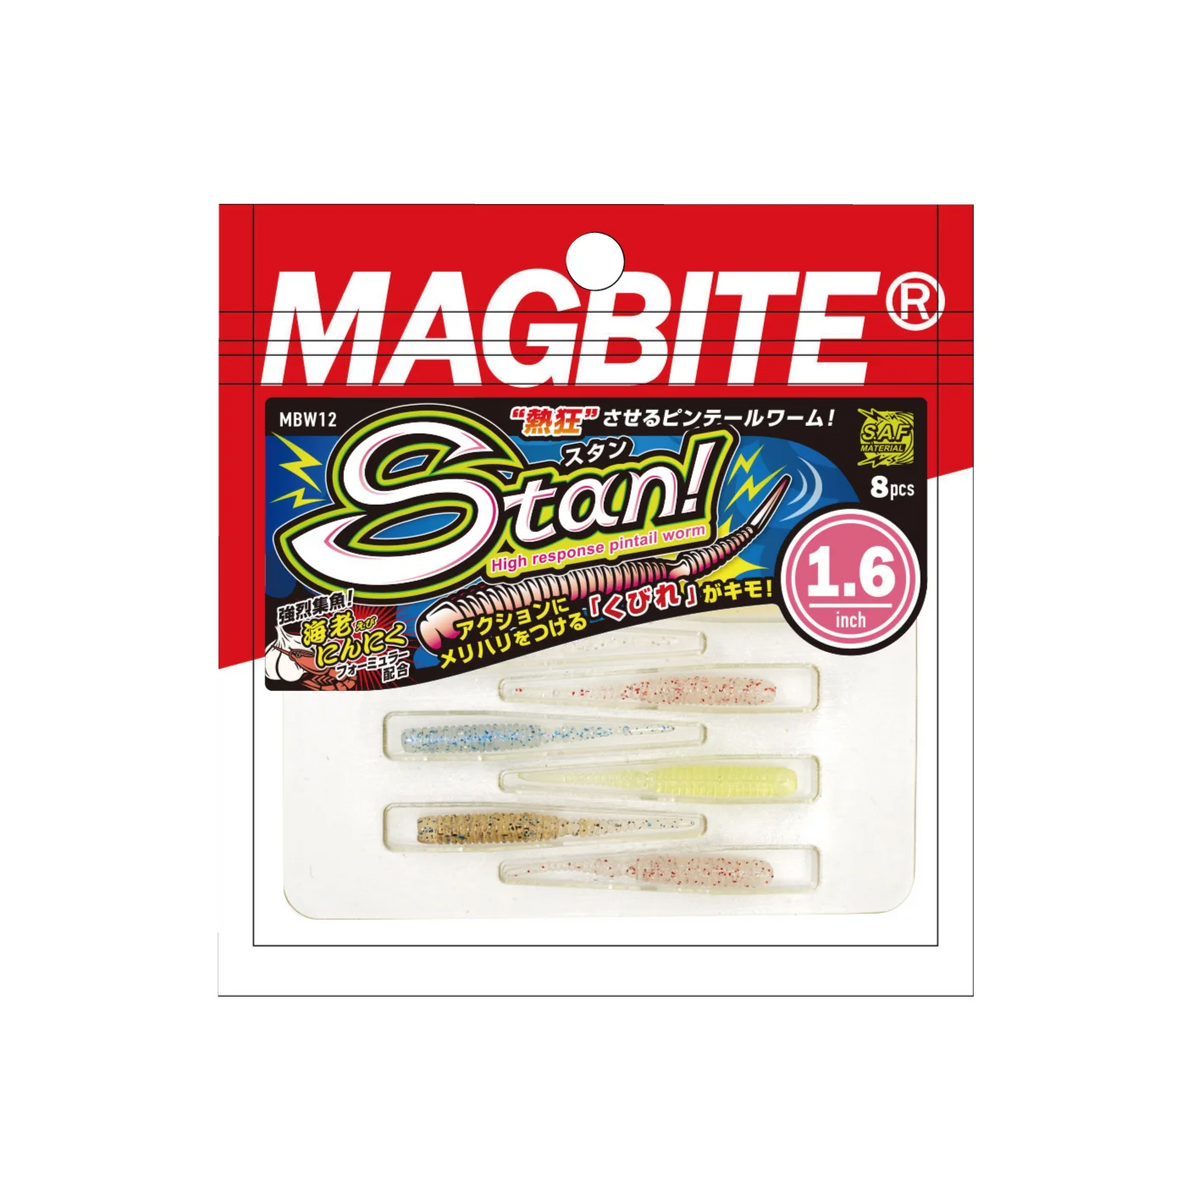 MAGBITE Soft Plastic Worm Stan 2.0 inch